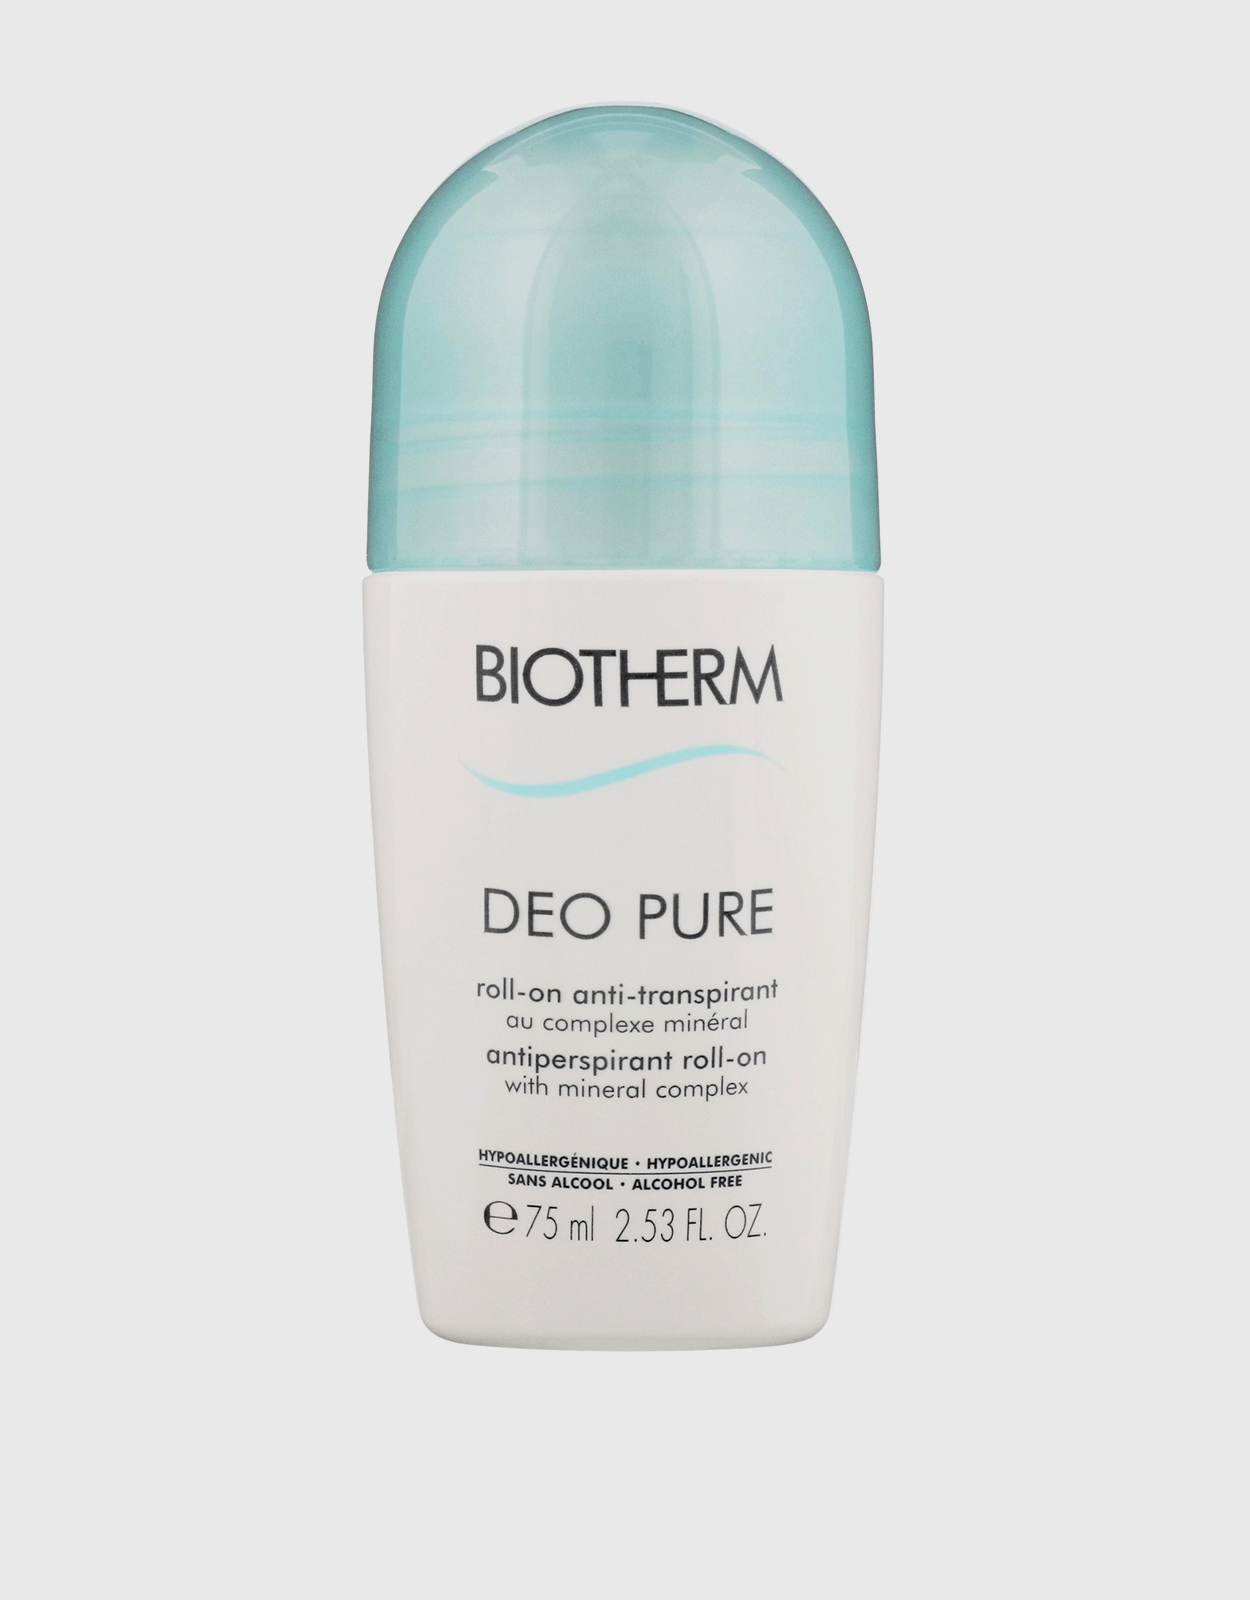 Biotherm Deo Pure Antiperspirant Roll-On Deodorant 75ml (Bath and Bodycare,Bodycare,Deodorant)